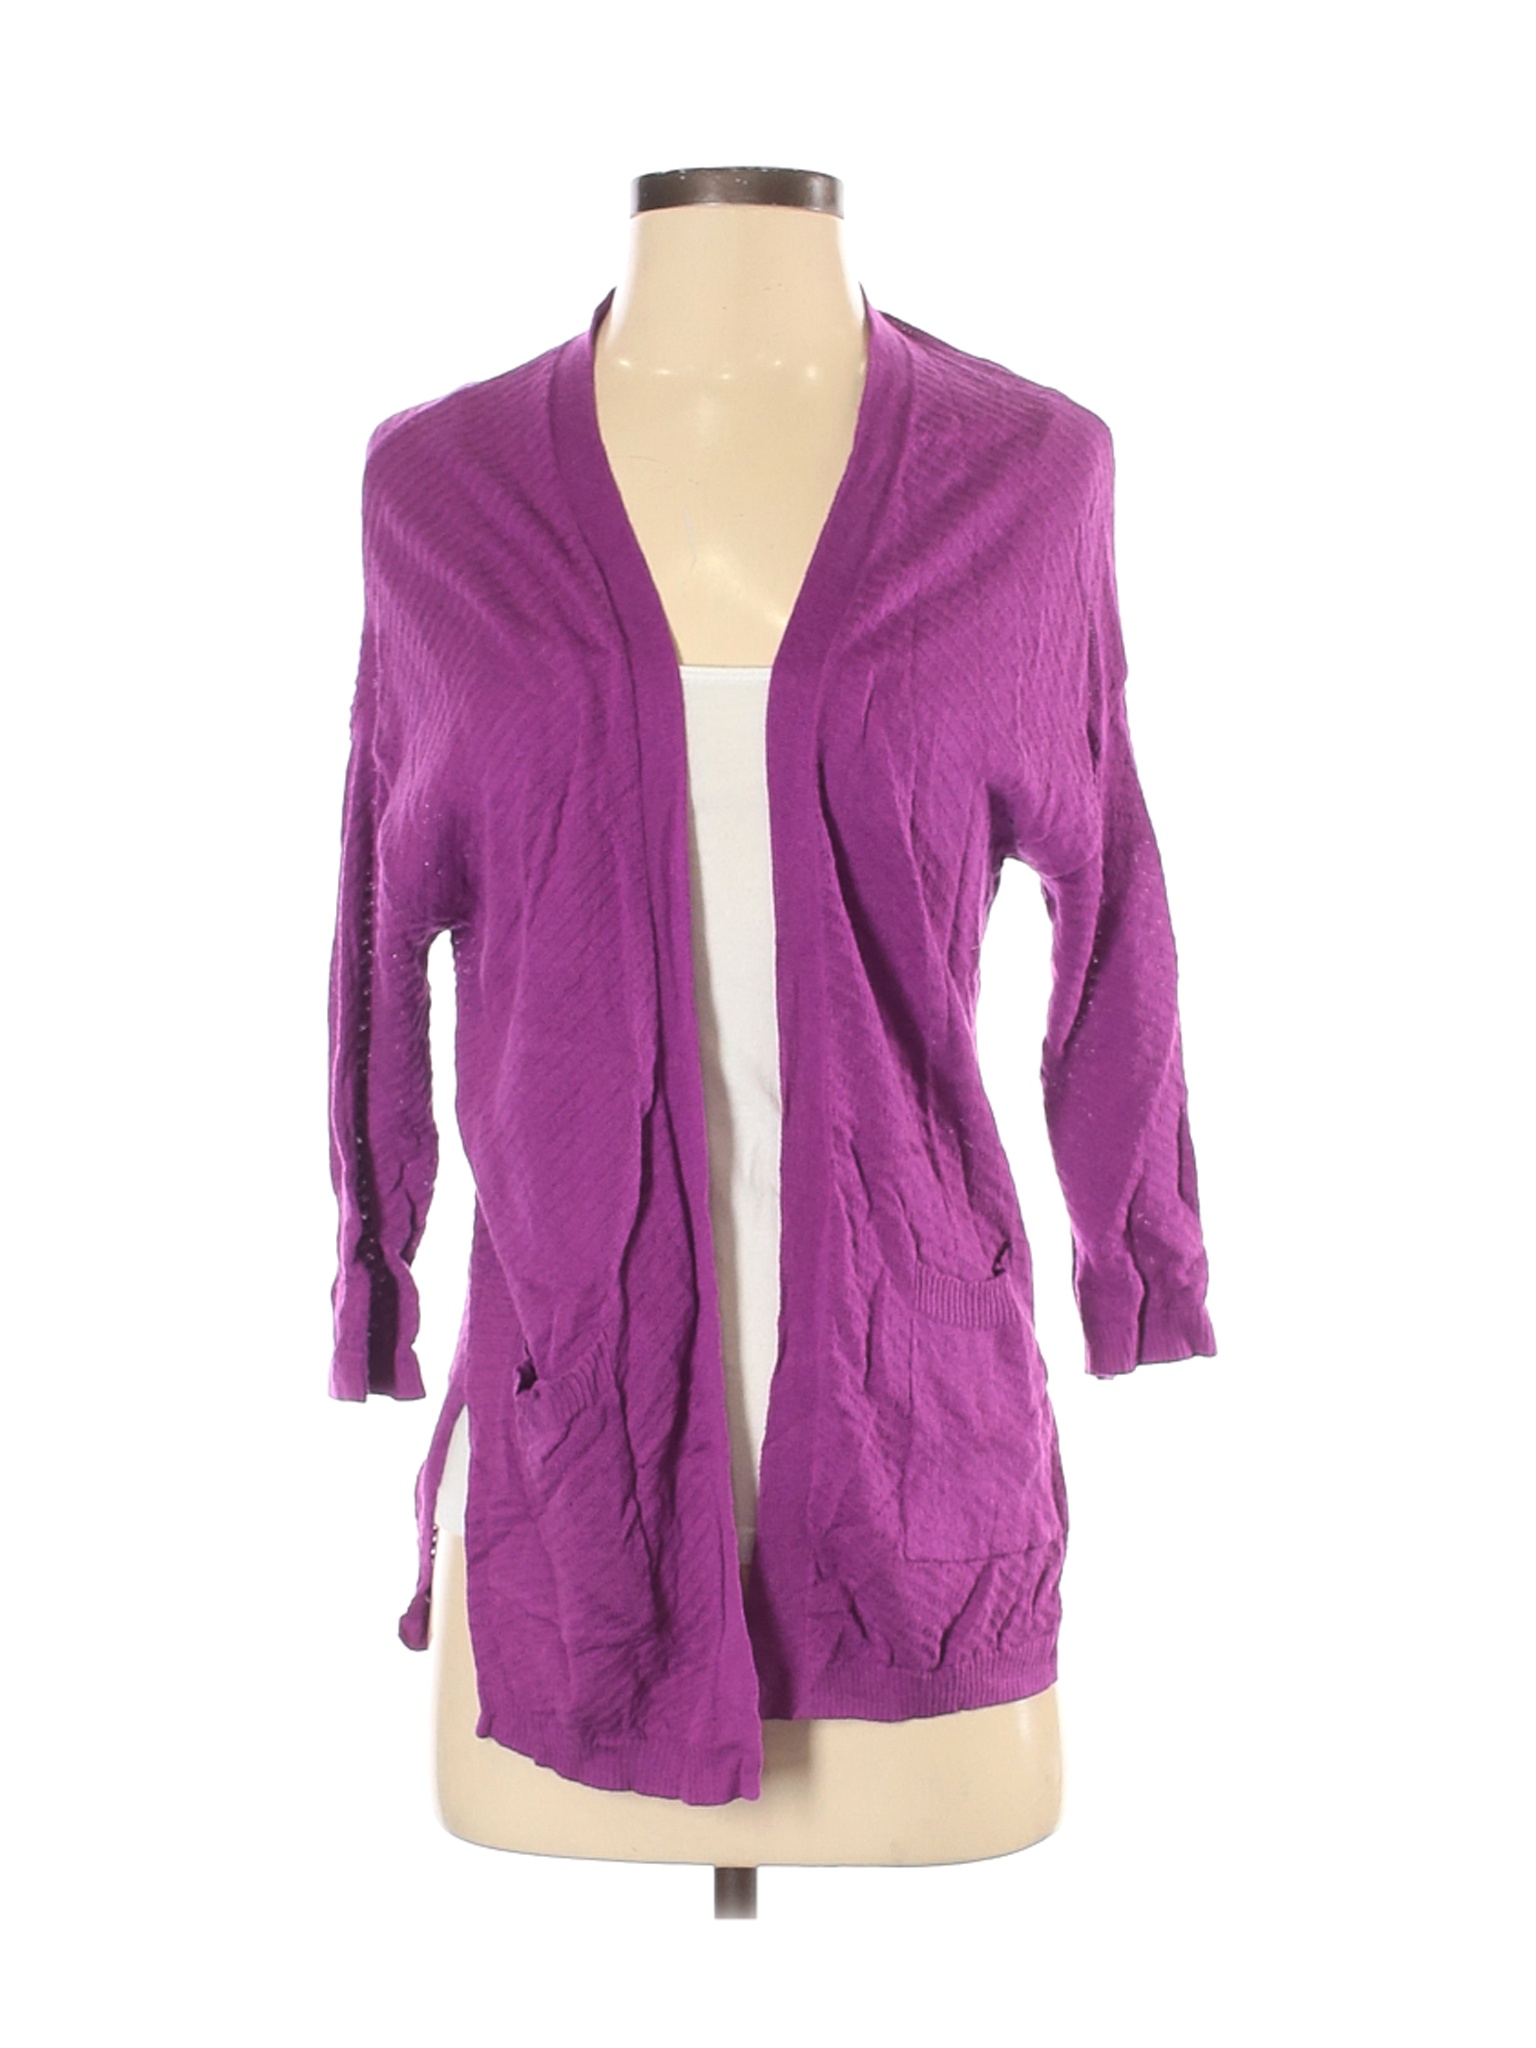 Old Navy Women Purple Cardigan XS | eBay